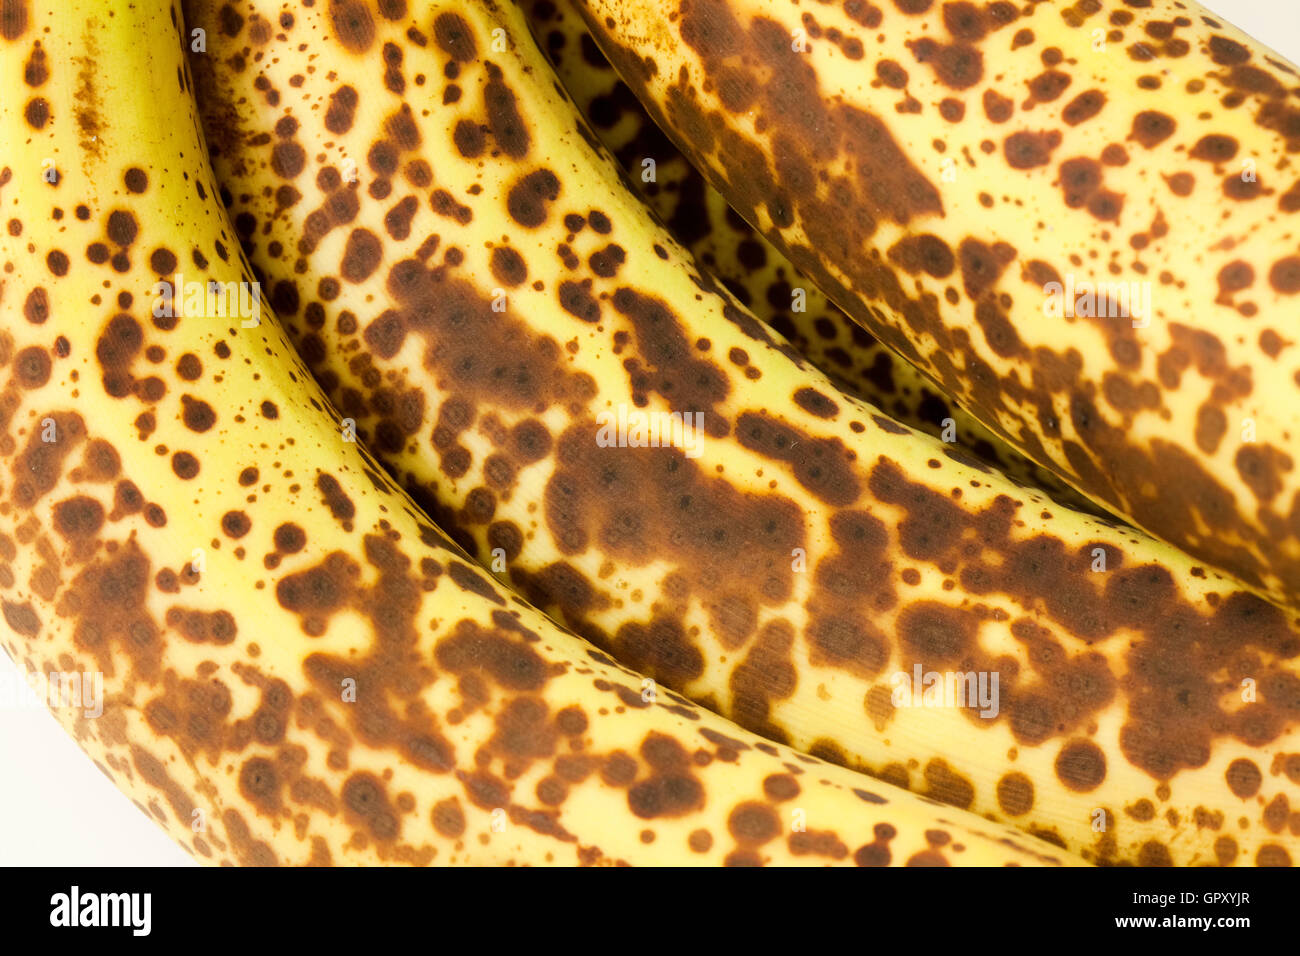 Closeup of overripe bananas  (brown spots) Stock Photo